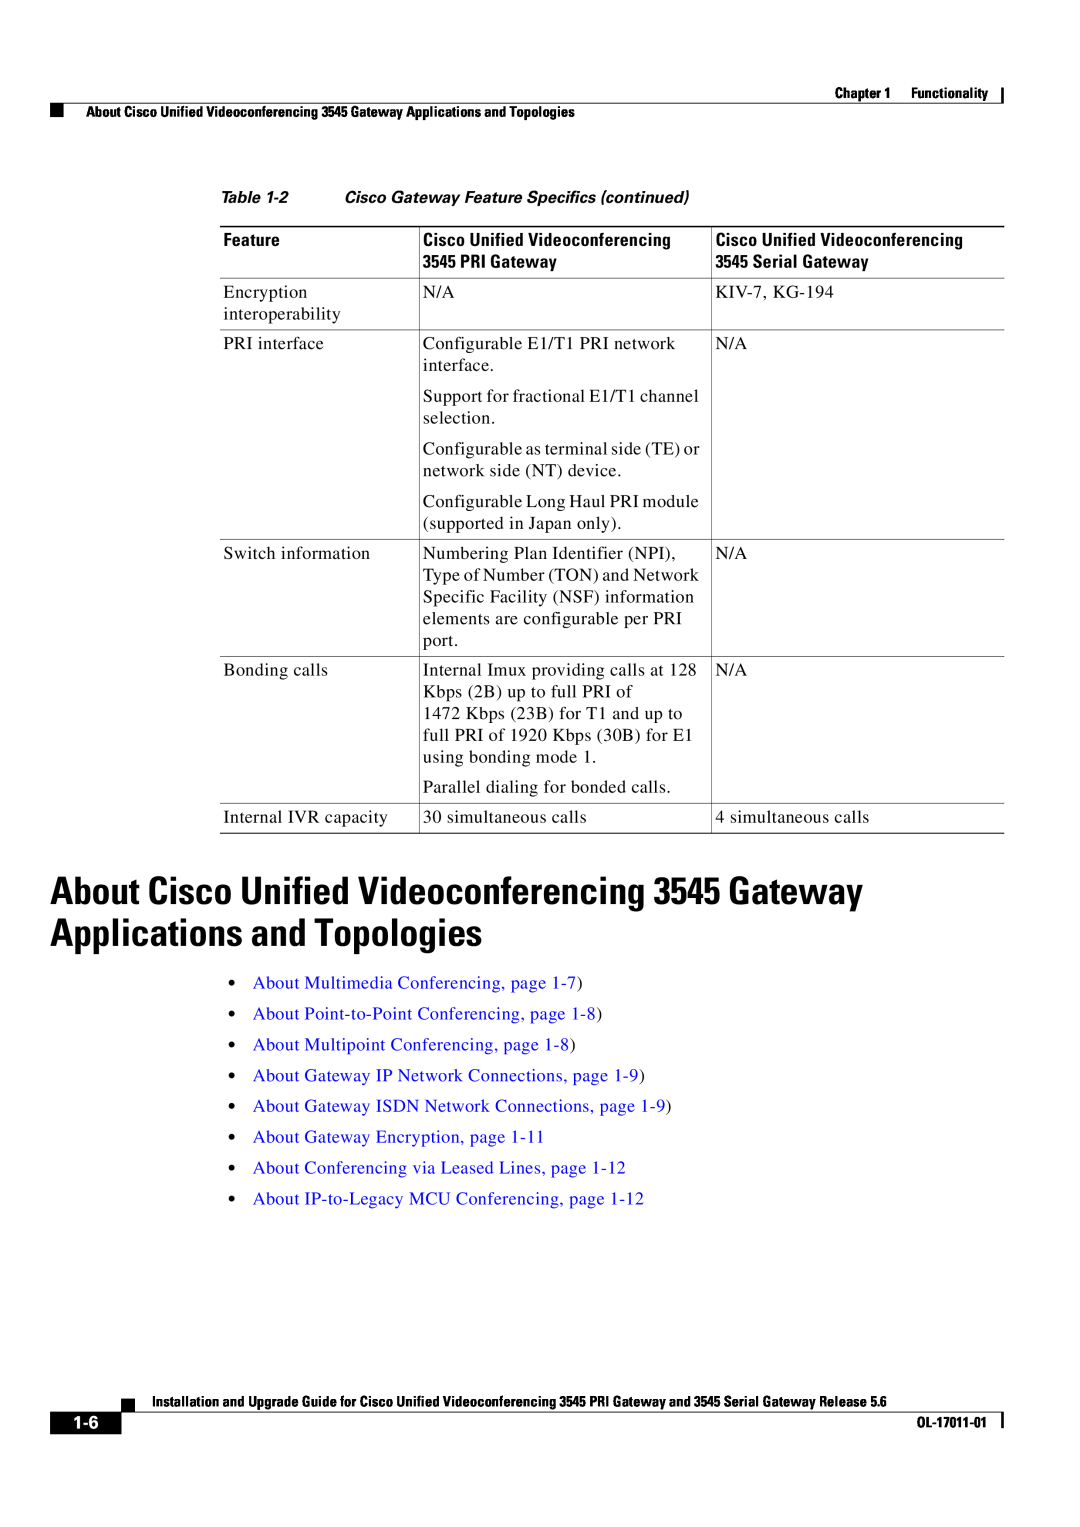 Cisco Systems 3545 PRI About Multimedia Conferencing, page, About Point-to-Point Conferencing, page, Feature, PRI Gateway 